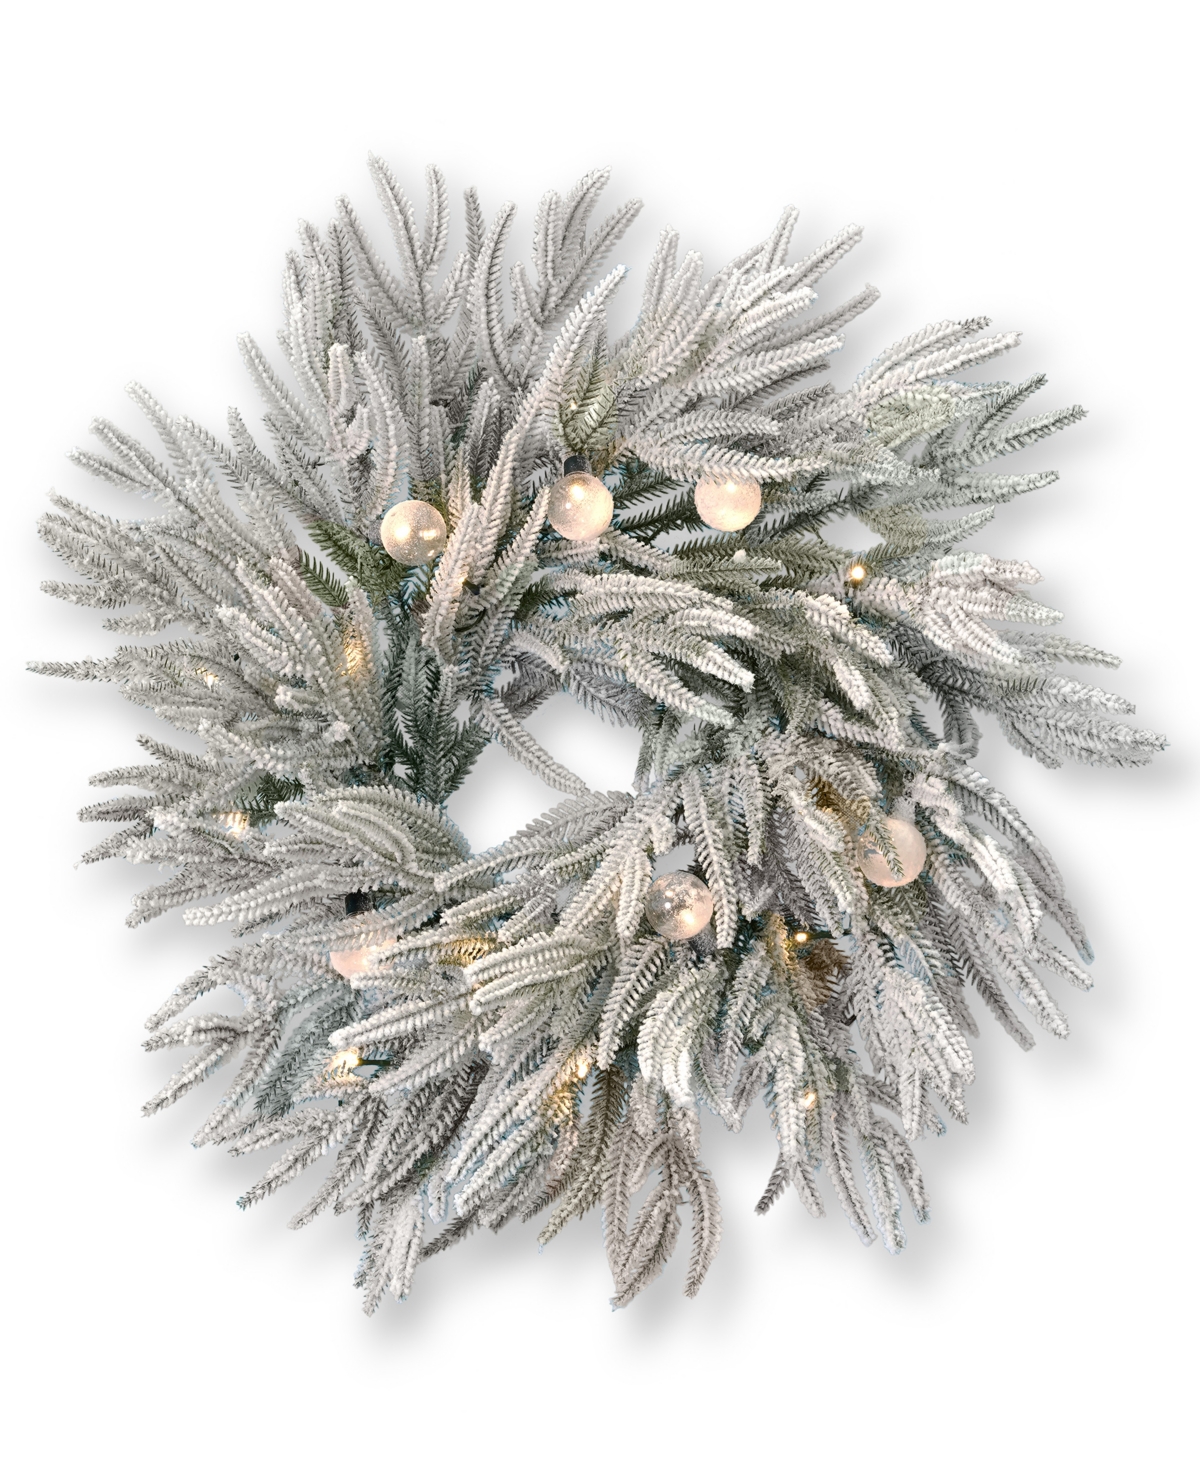 Frosted Acadia 24" Flocked Polyethylene Polyvinyl Chloride Wreath 50 Bo Lights 400 Tips, Color Changing Bo Led - White